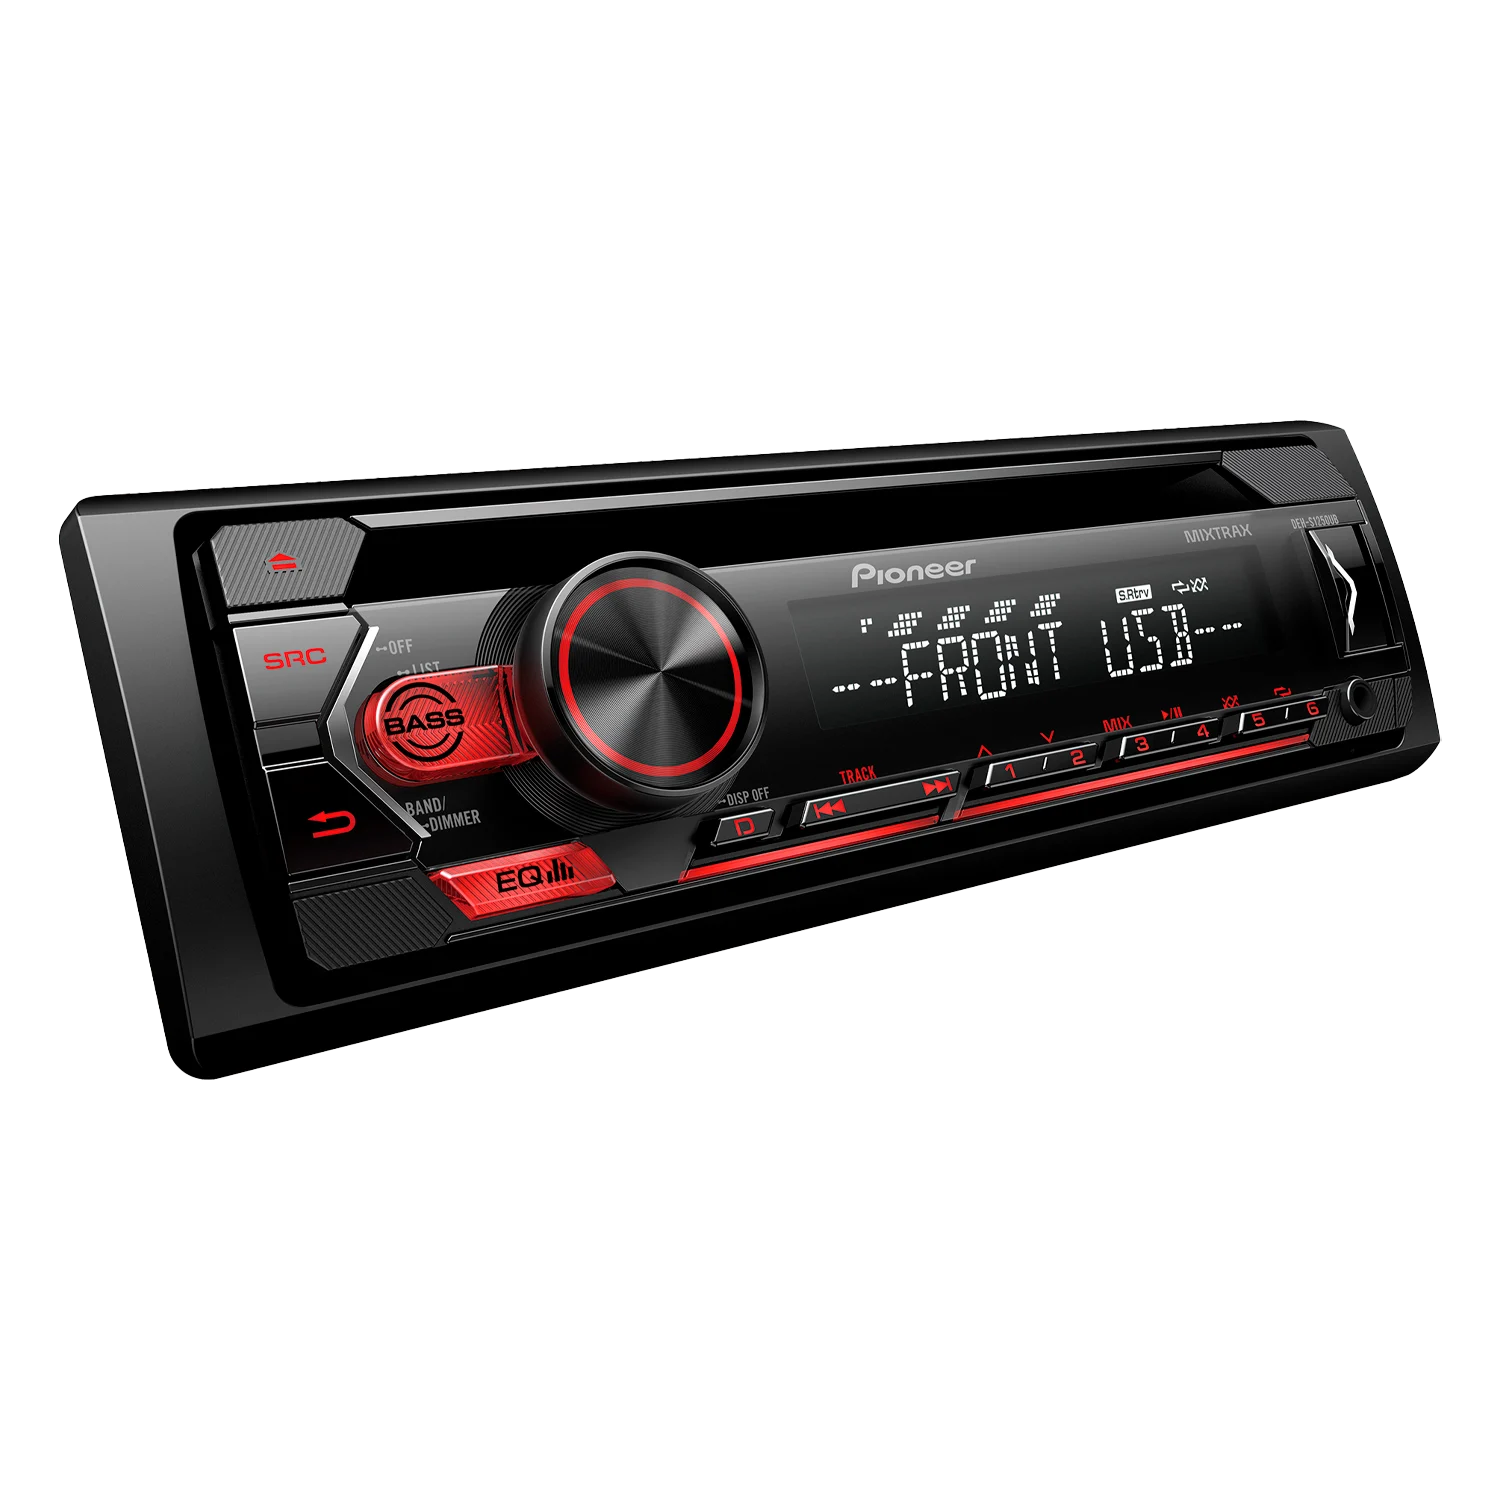 Toca rádio Pioneer DEH-S1250UB  USB / AM / FM / MP3 / Auxiliar / Mixtrax- preto